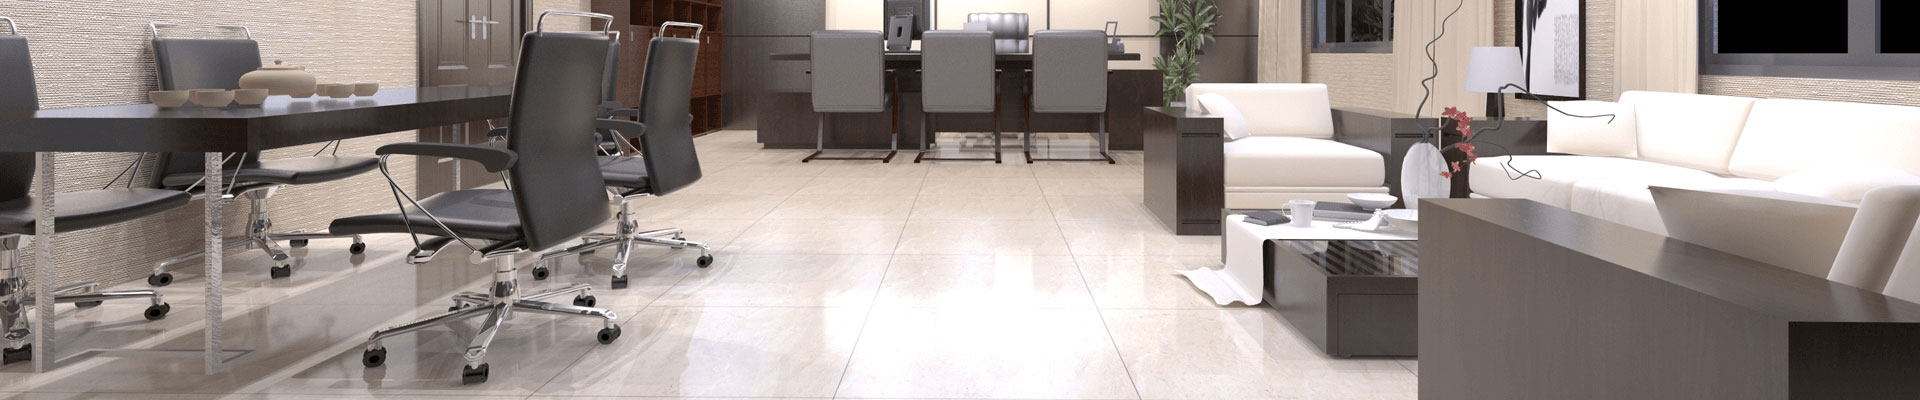 Show All Office Floor Tiles